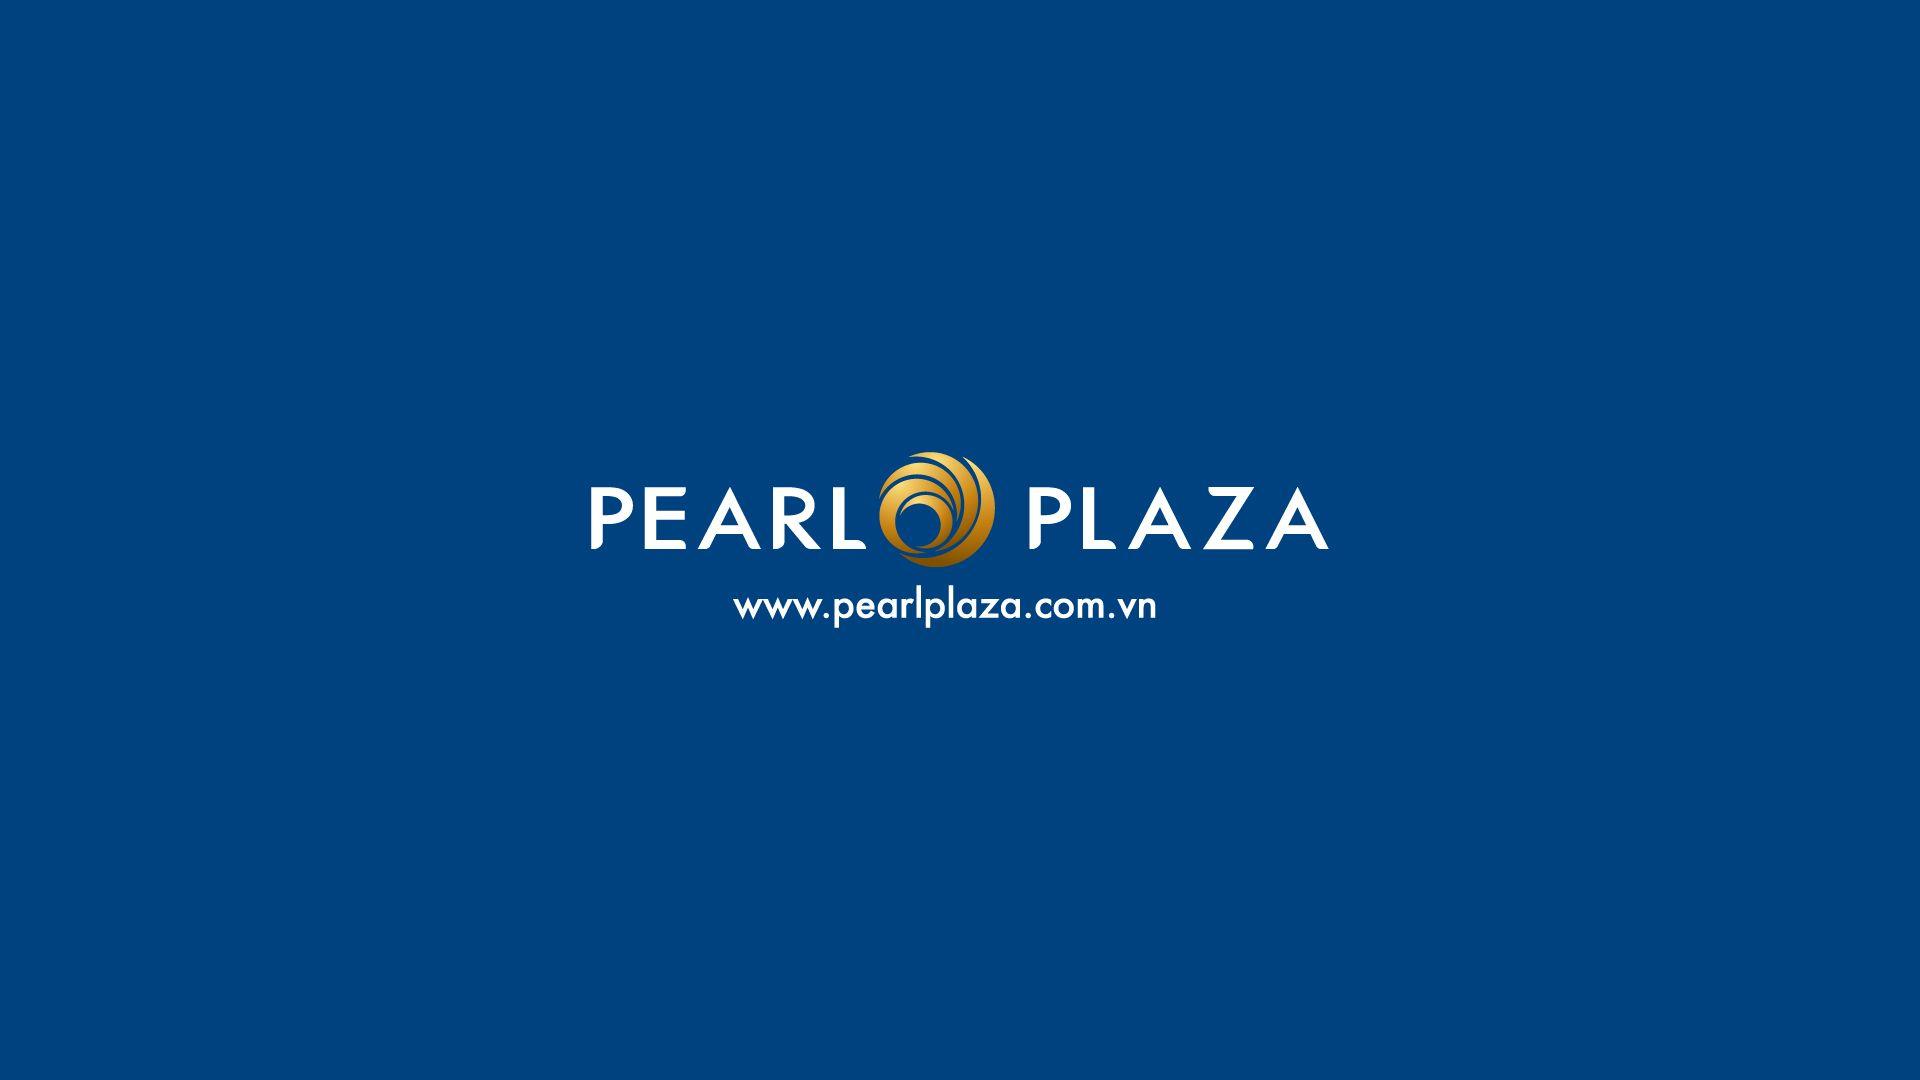 Plaza Logo - PEARL PLAZA